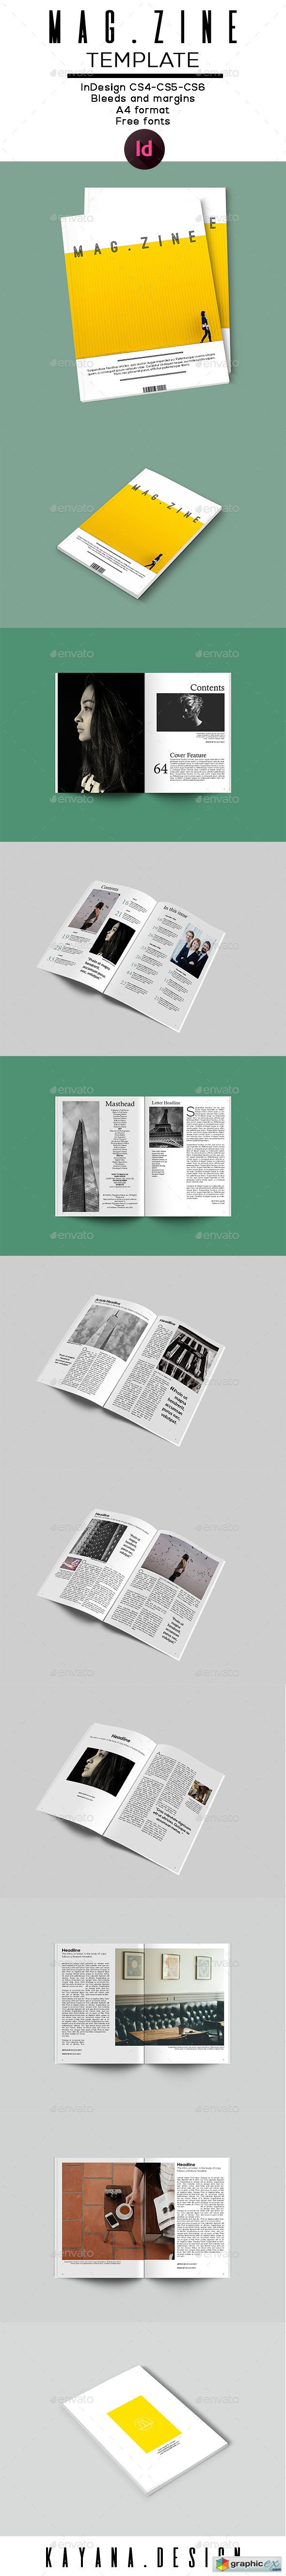 Mag.zine A4 Magazine Template